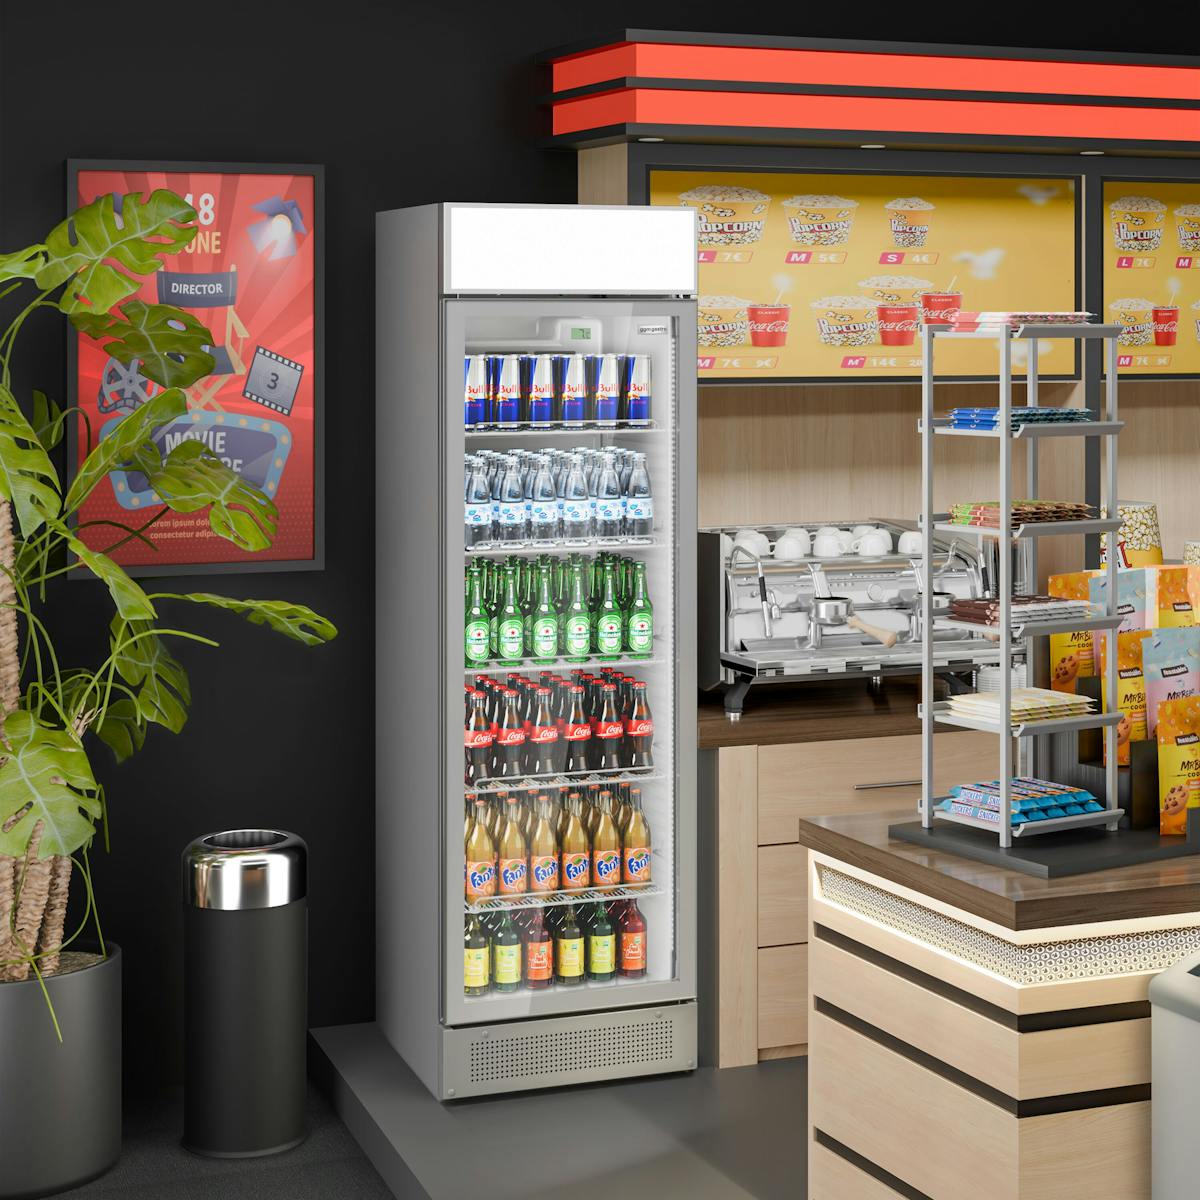 Beverage refrigerator - 345 litres - frameless design - with advertising display